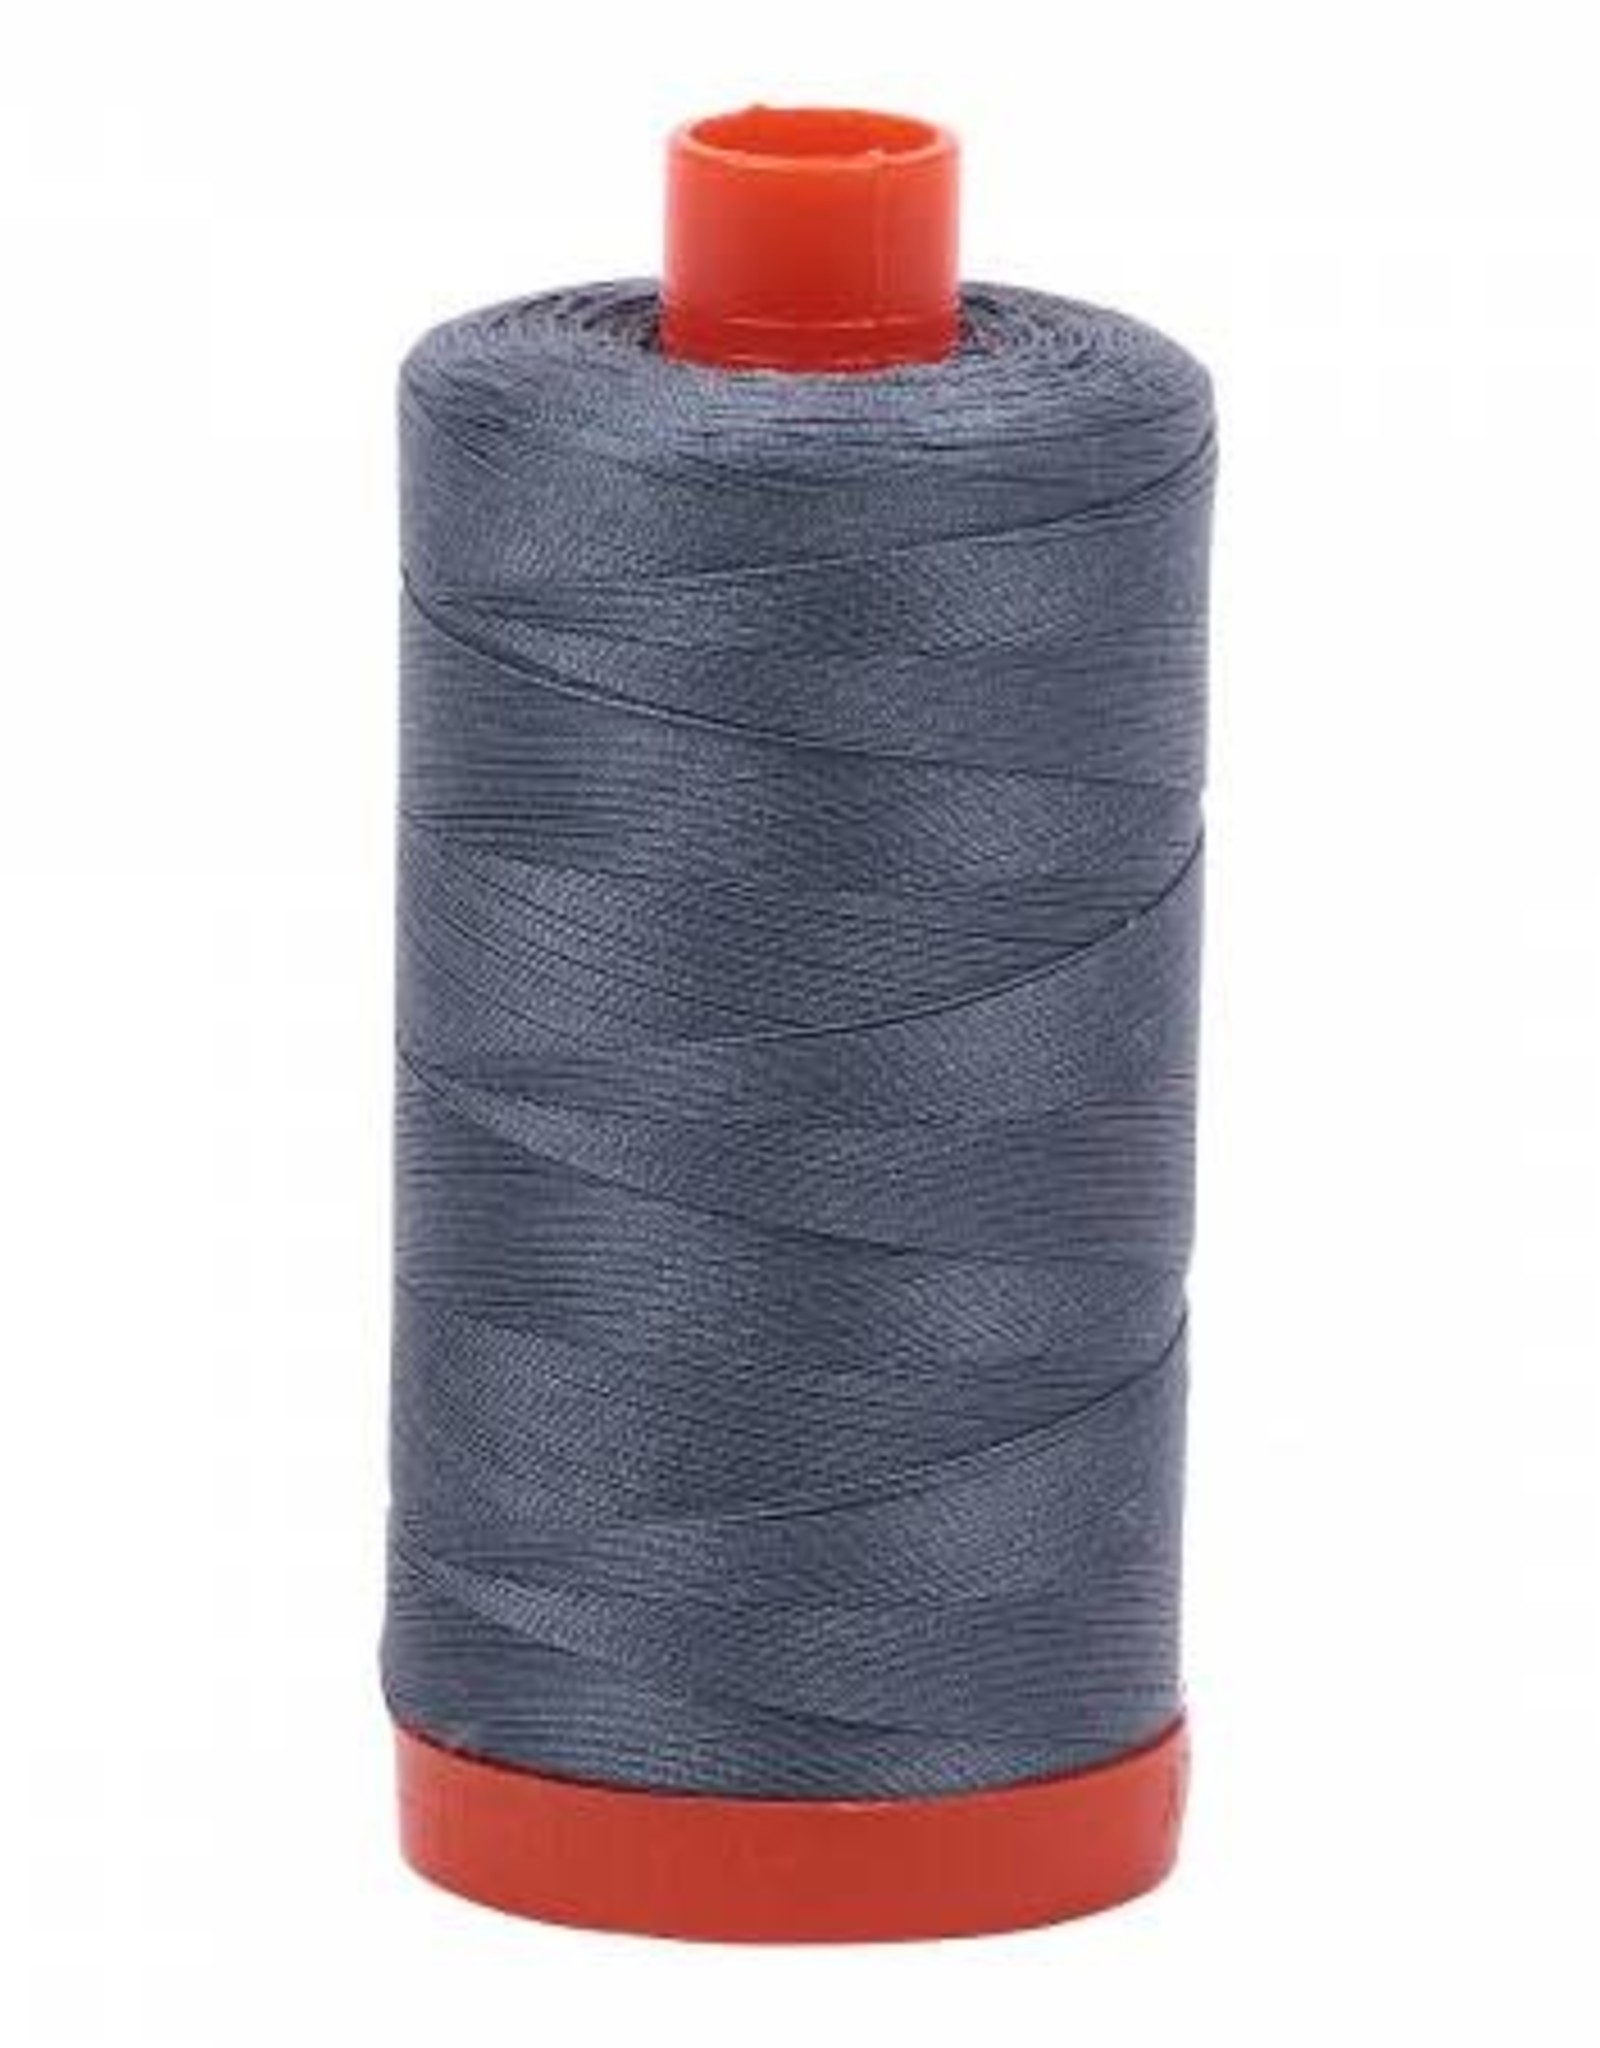 Aurifil Mako Cotton Thread Solid 50wt - Dark Grey (1246)